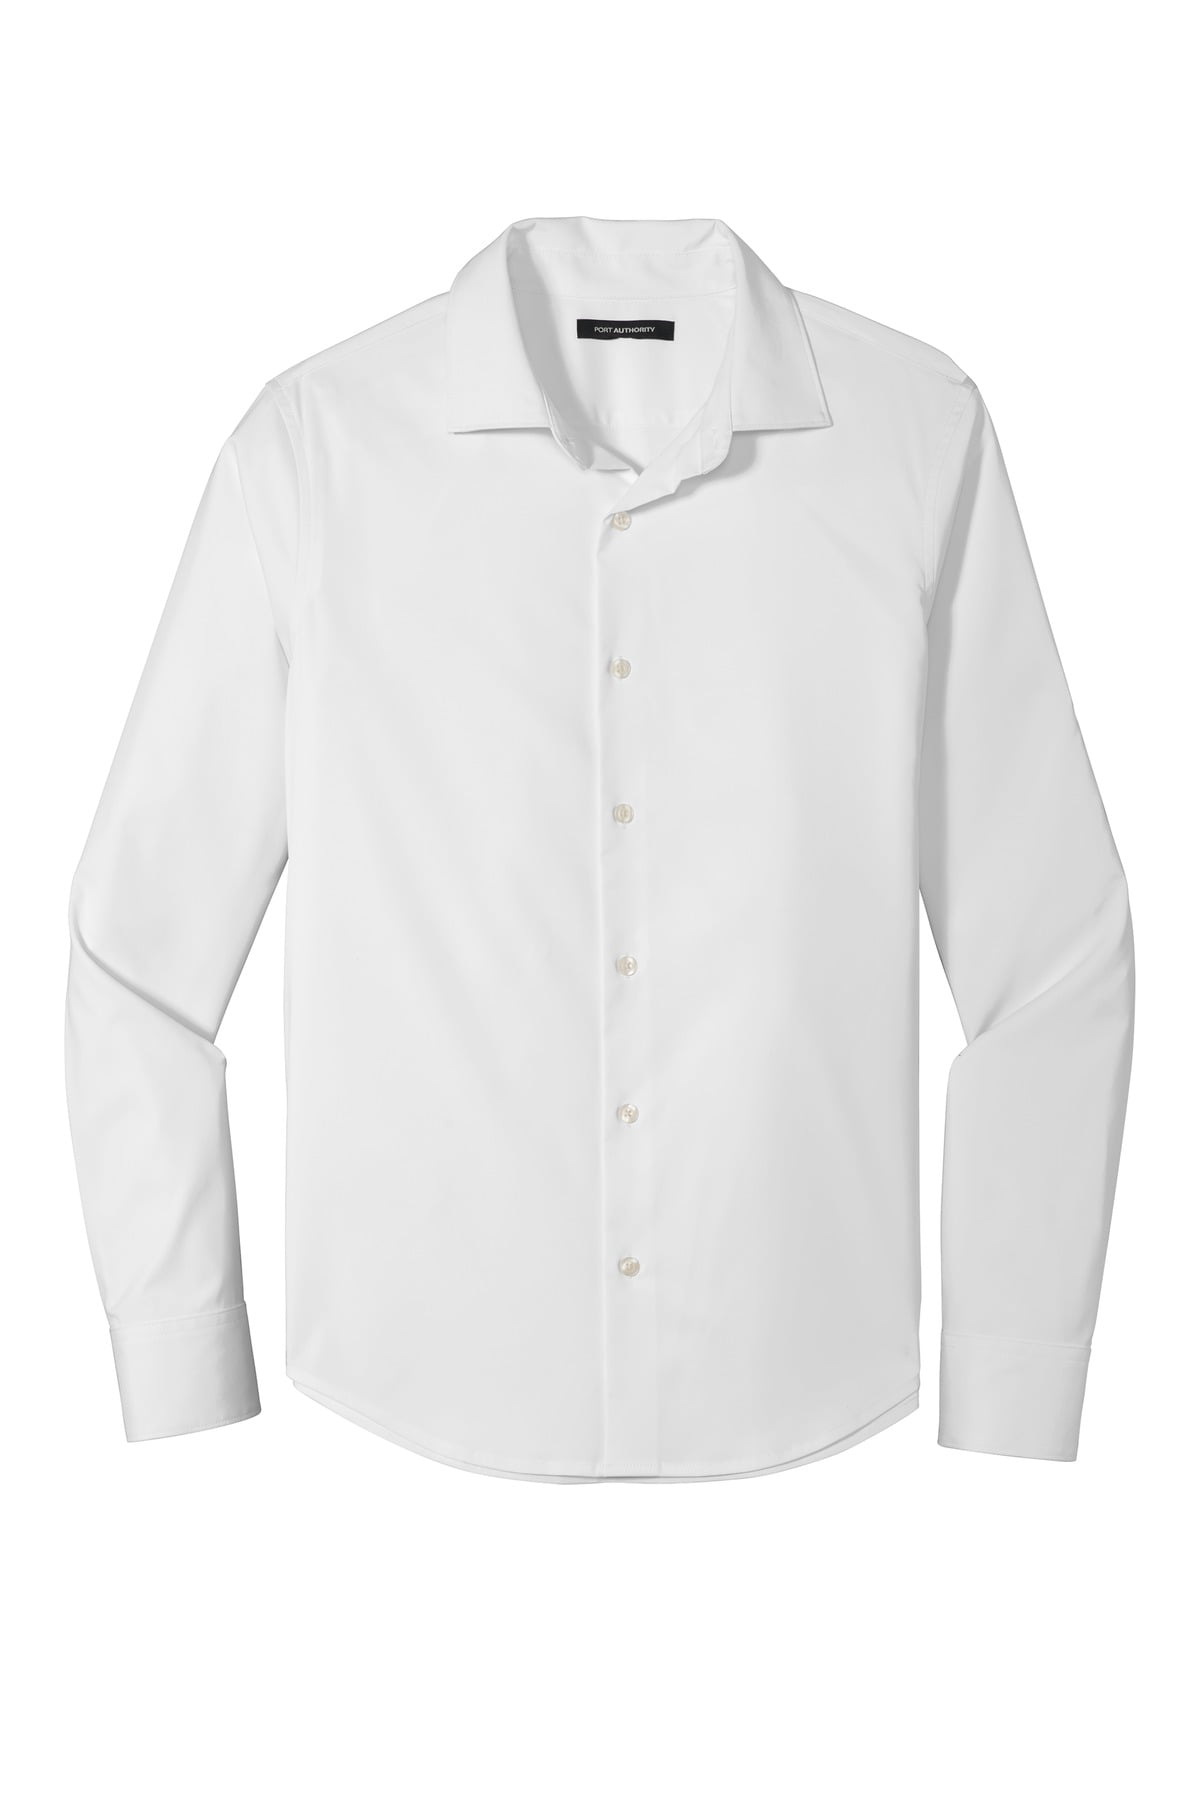 Port Authority Long Sleeve Collared Plain Button-Up Shirt (Men's